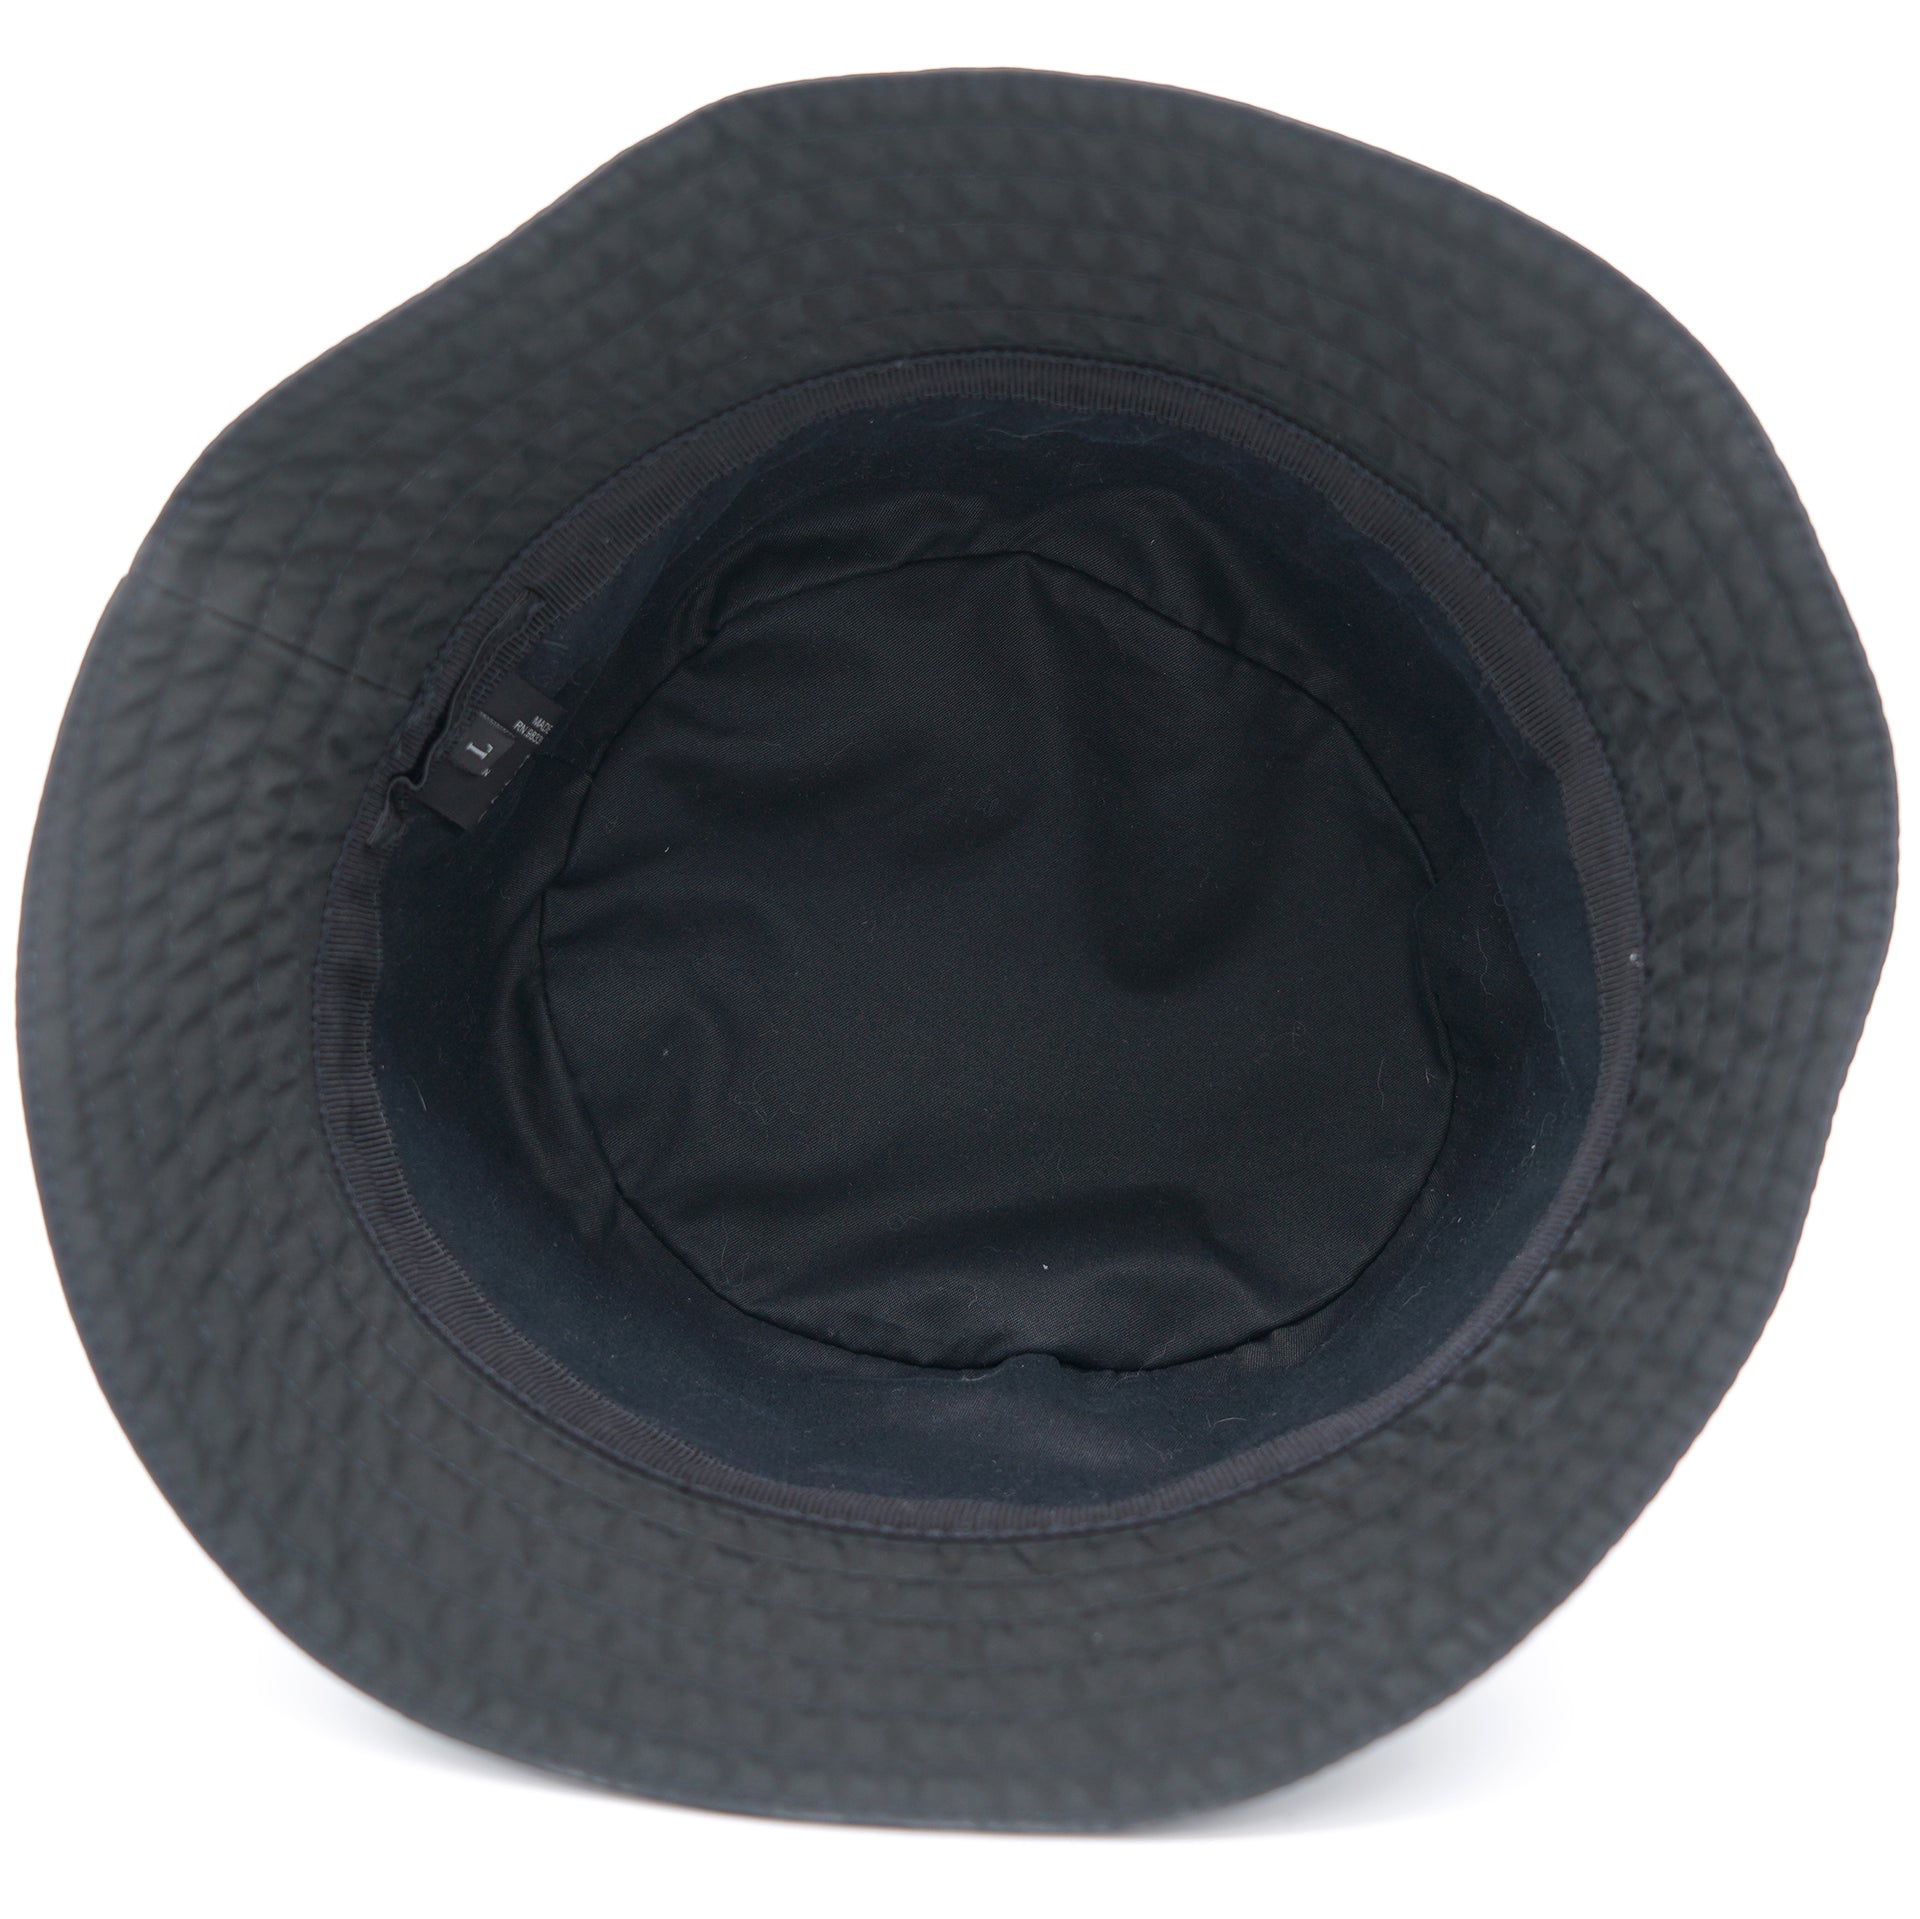 Technical Fabric Bucket Hat L